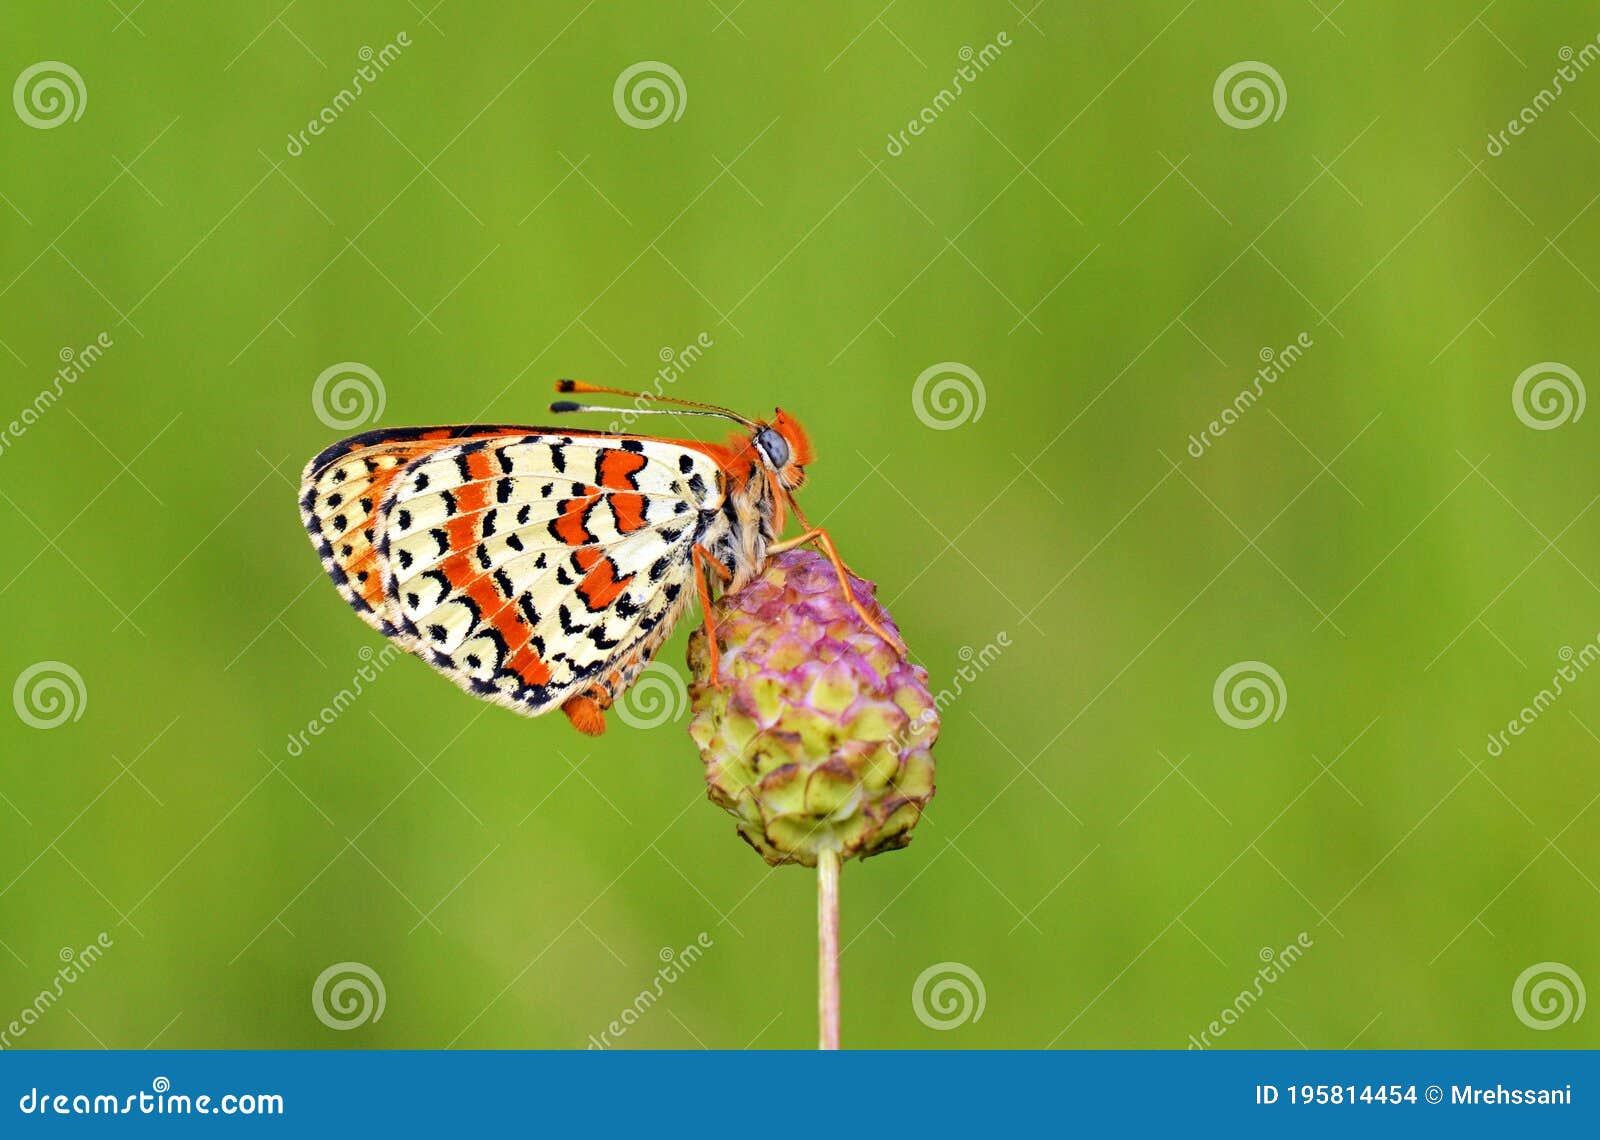 melitaea interrupta , the caucasian spotted fritillary butterfly